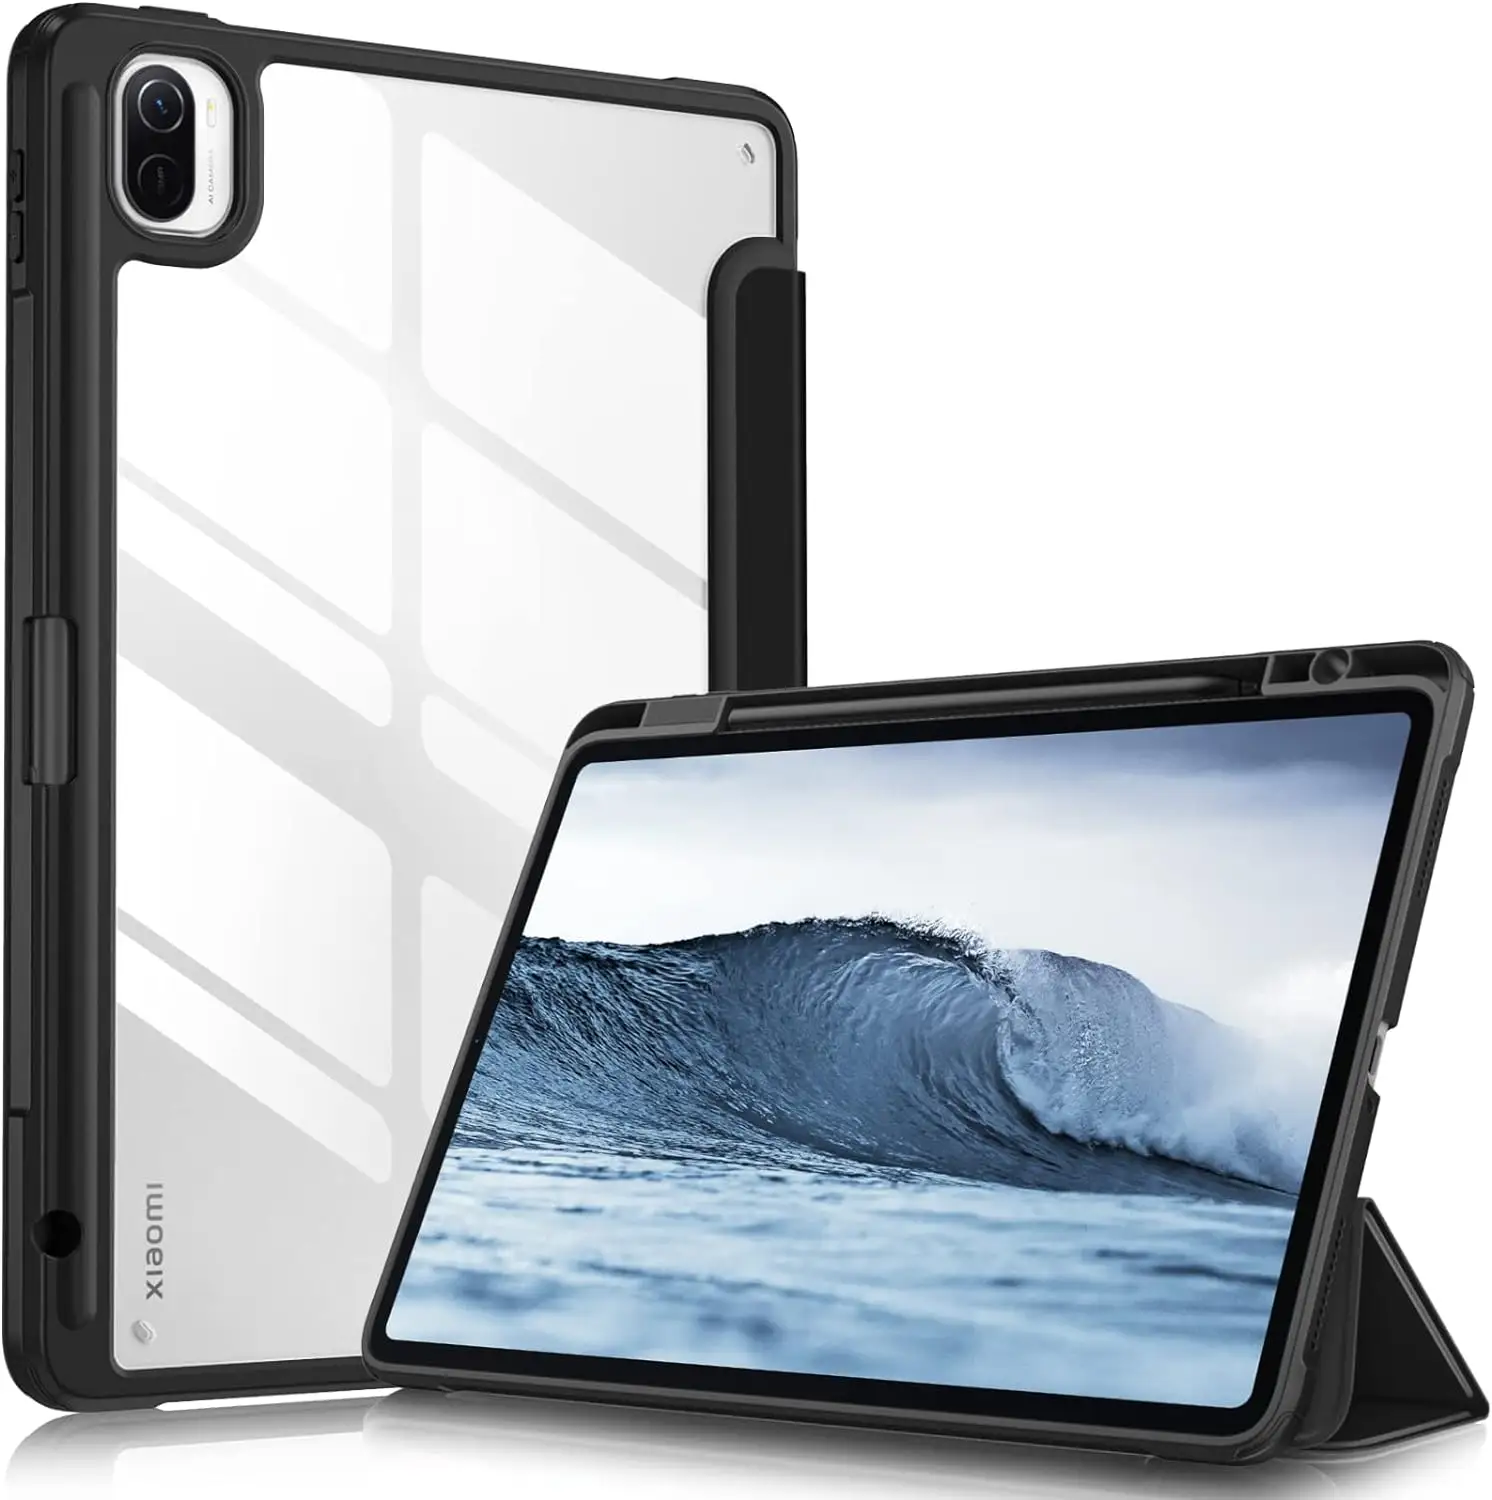 Shemax Flip kapak Tablet kılıfı için Xiaomi Mipad hibrid kalem depolama hibrid telefon kılıfı koruyucu kapak için Xiaomi Pad 5 / Pad 5 Pro